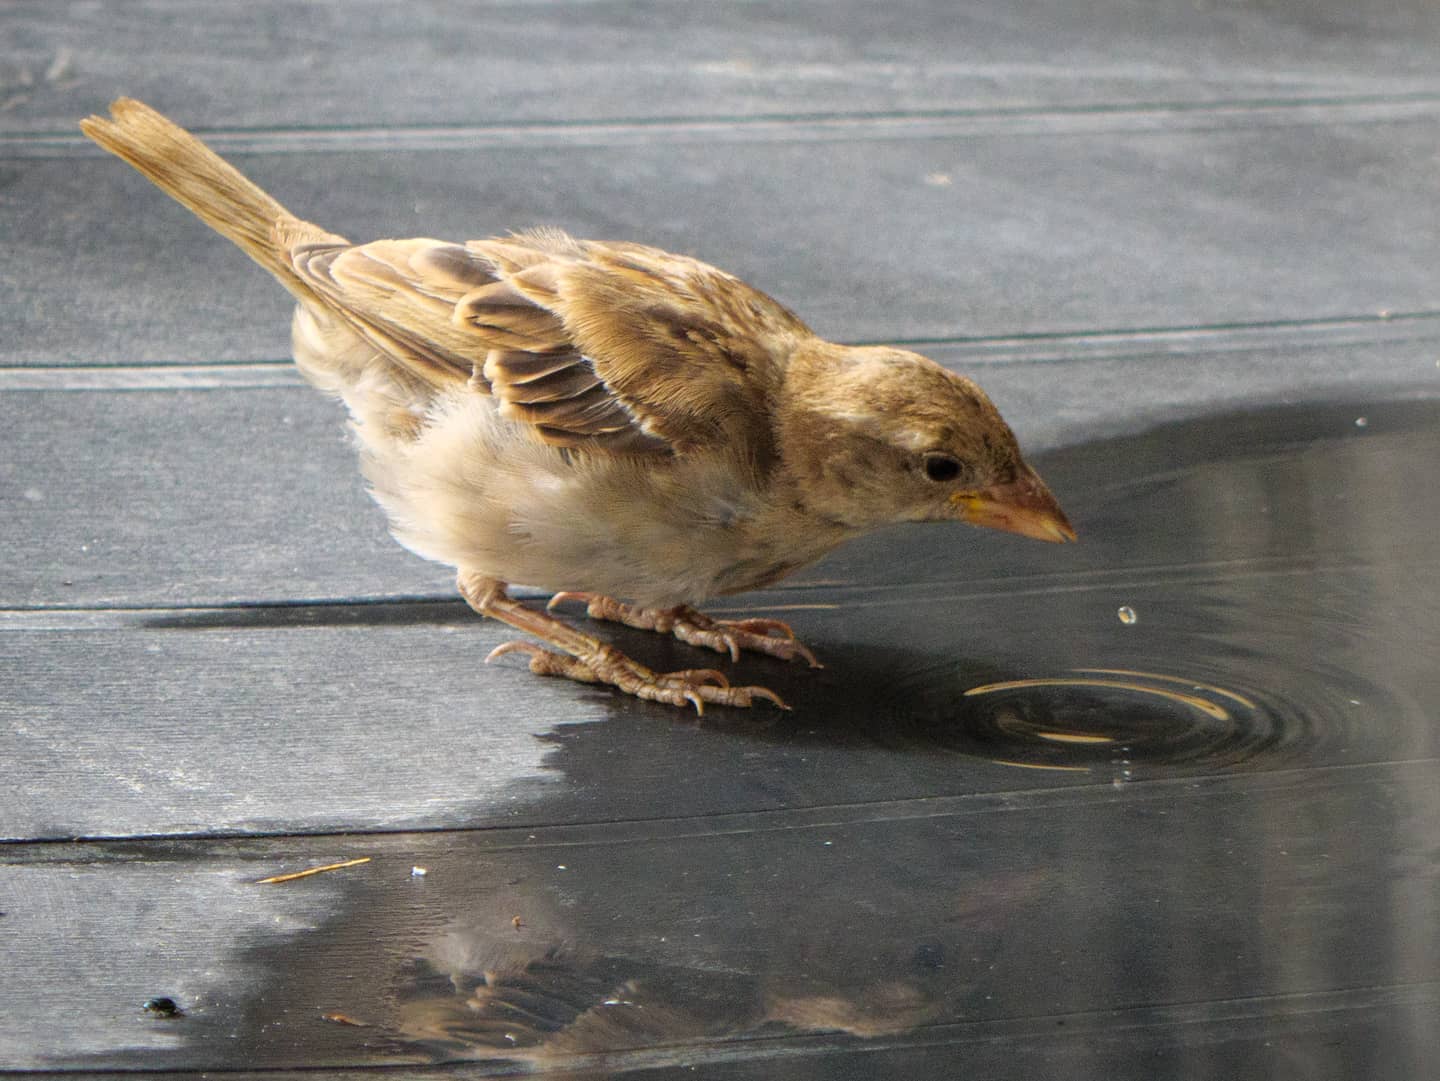 Gorriona.⠀⠀⠀.⠀⠀⠀.⠀⠀⠀.⠀⠀⠀#lumixg9 #microfourthirds #sparrow #birdphotography